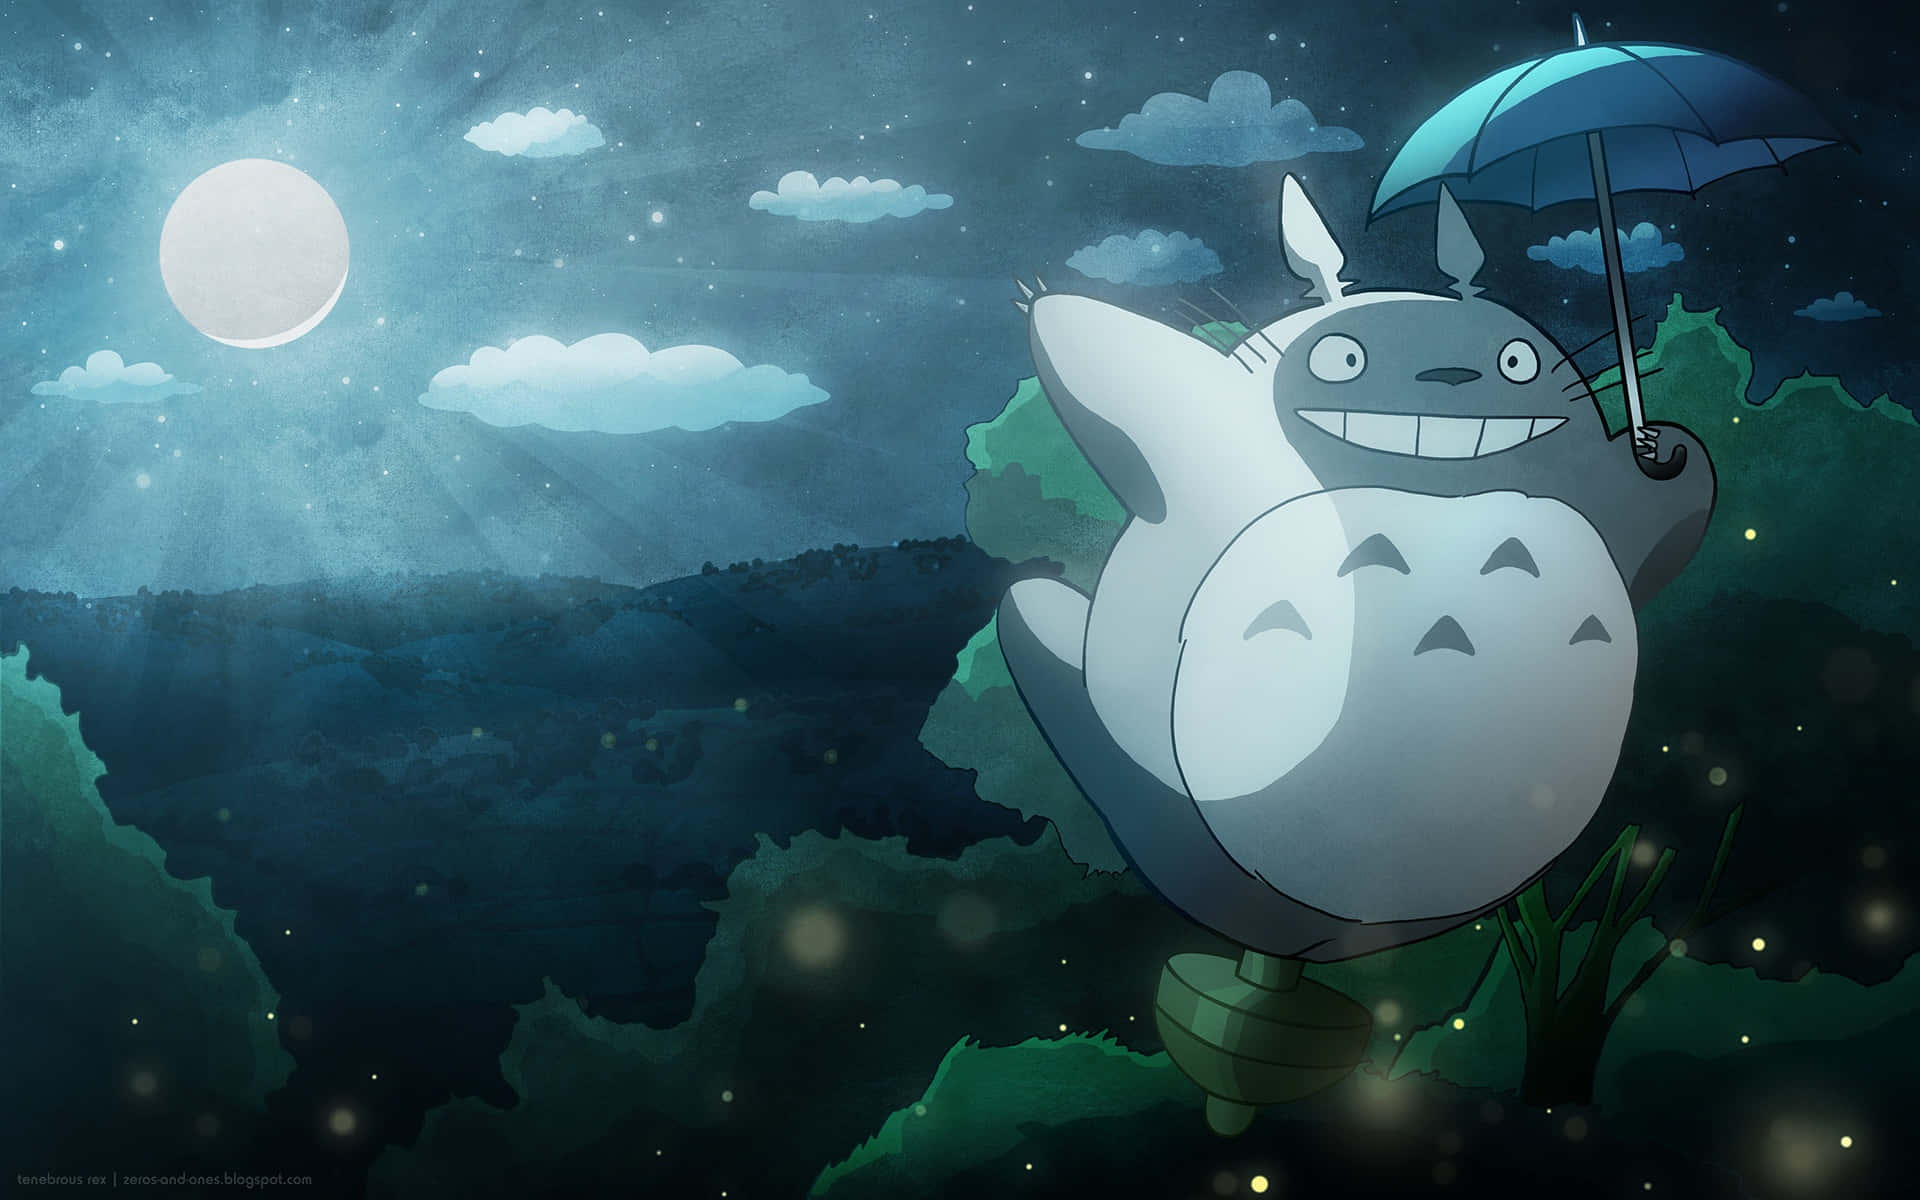 My Neighbor Totoro in a mesmerizing scene from the popular Studio Ghibli movie Wallpaper